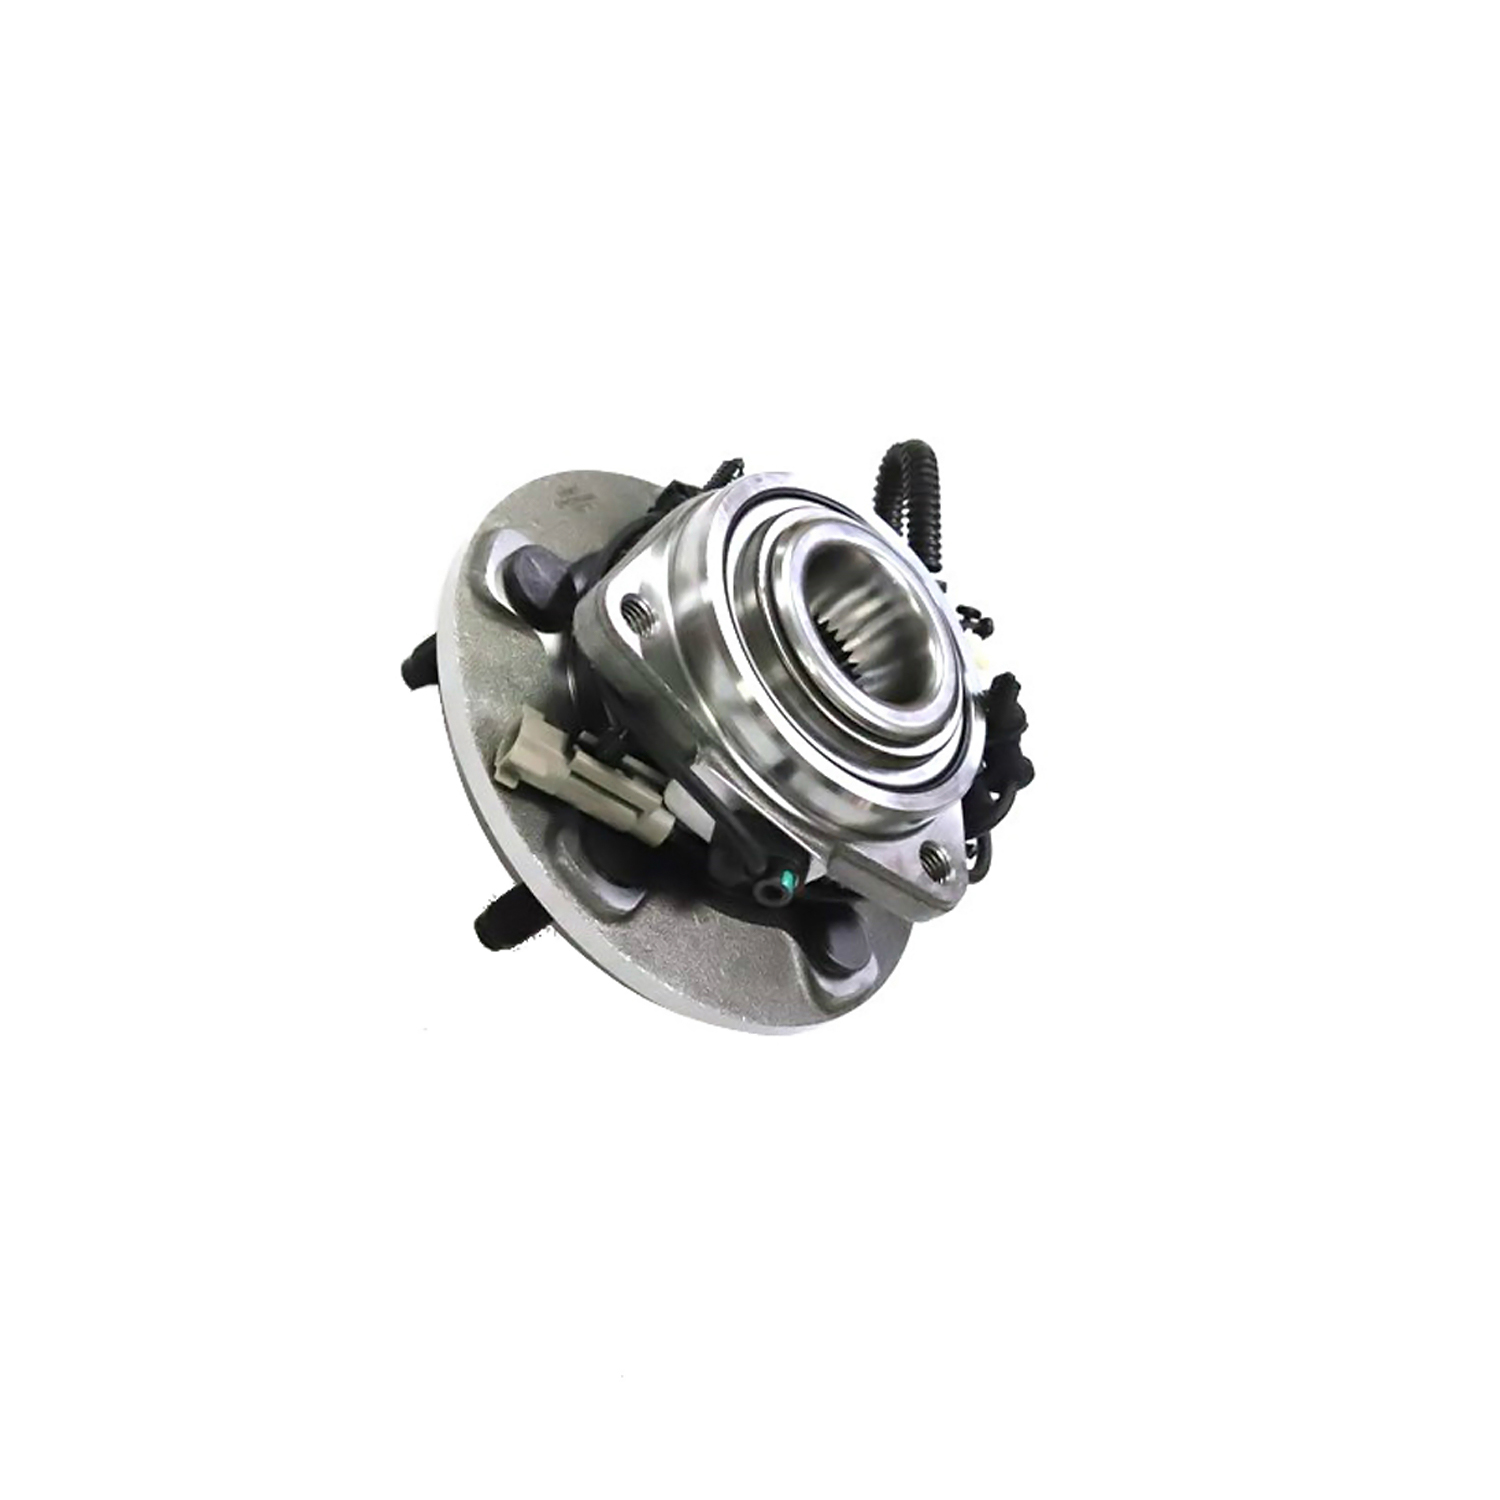 MOPAR PARTS - Wheel Bearing & Hub Assembly - MOP 52089434AE